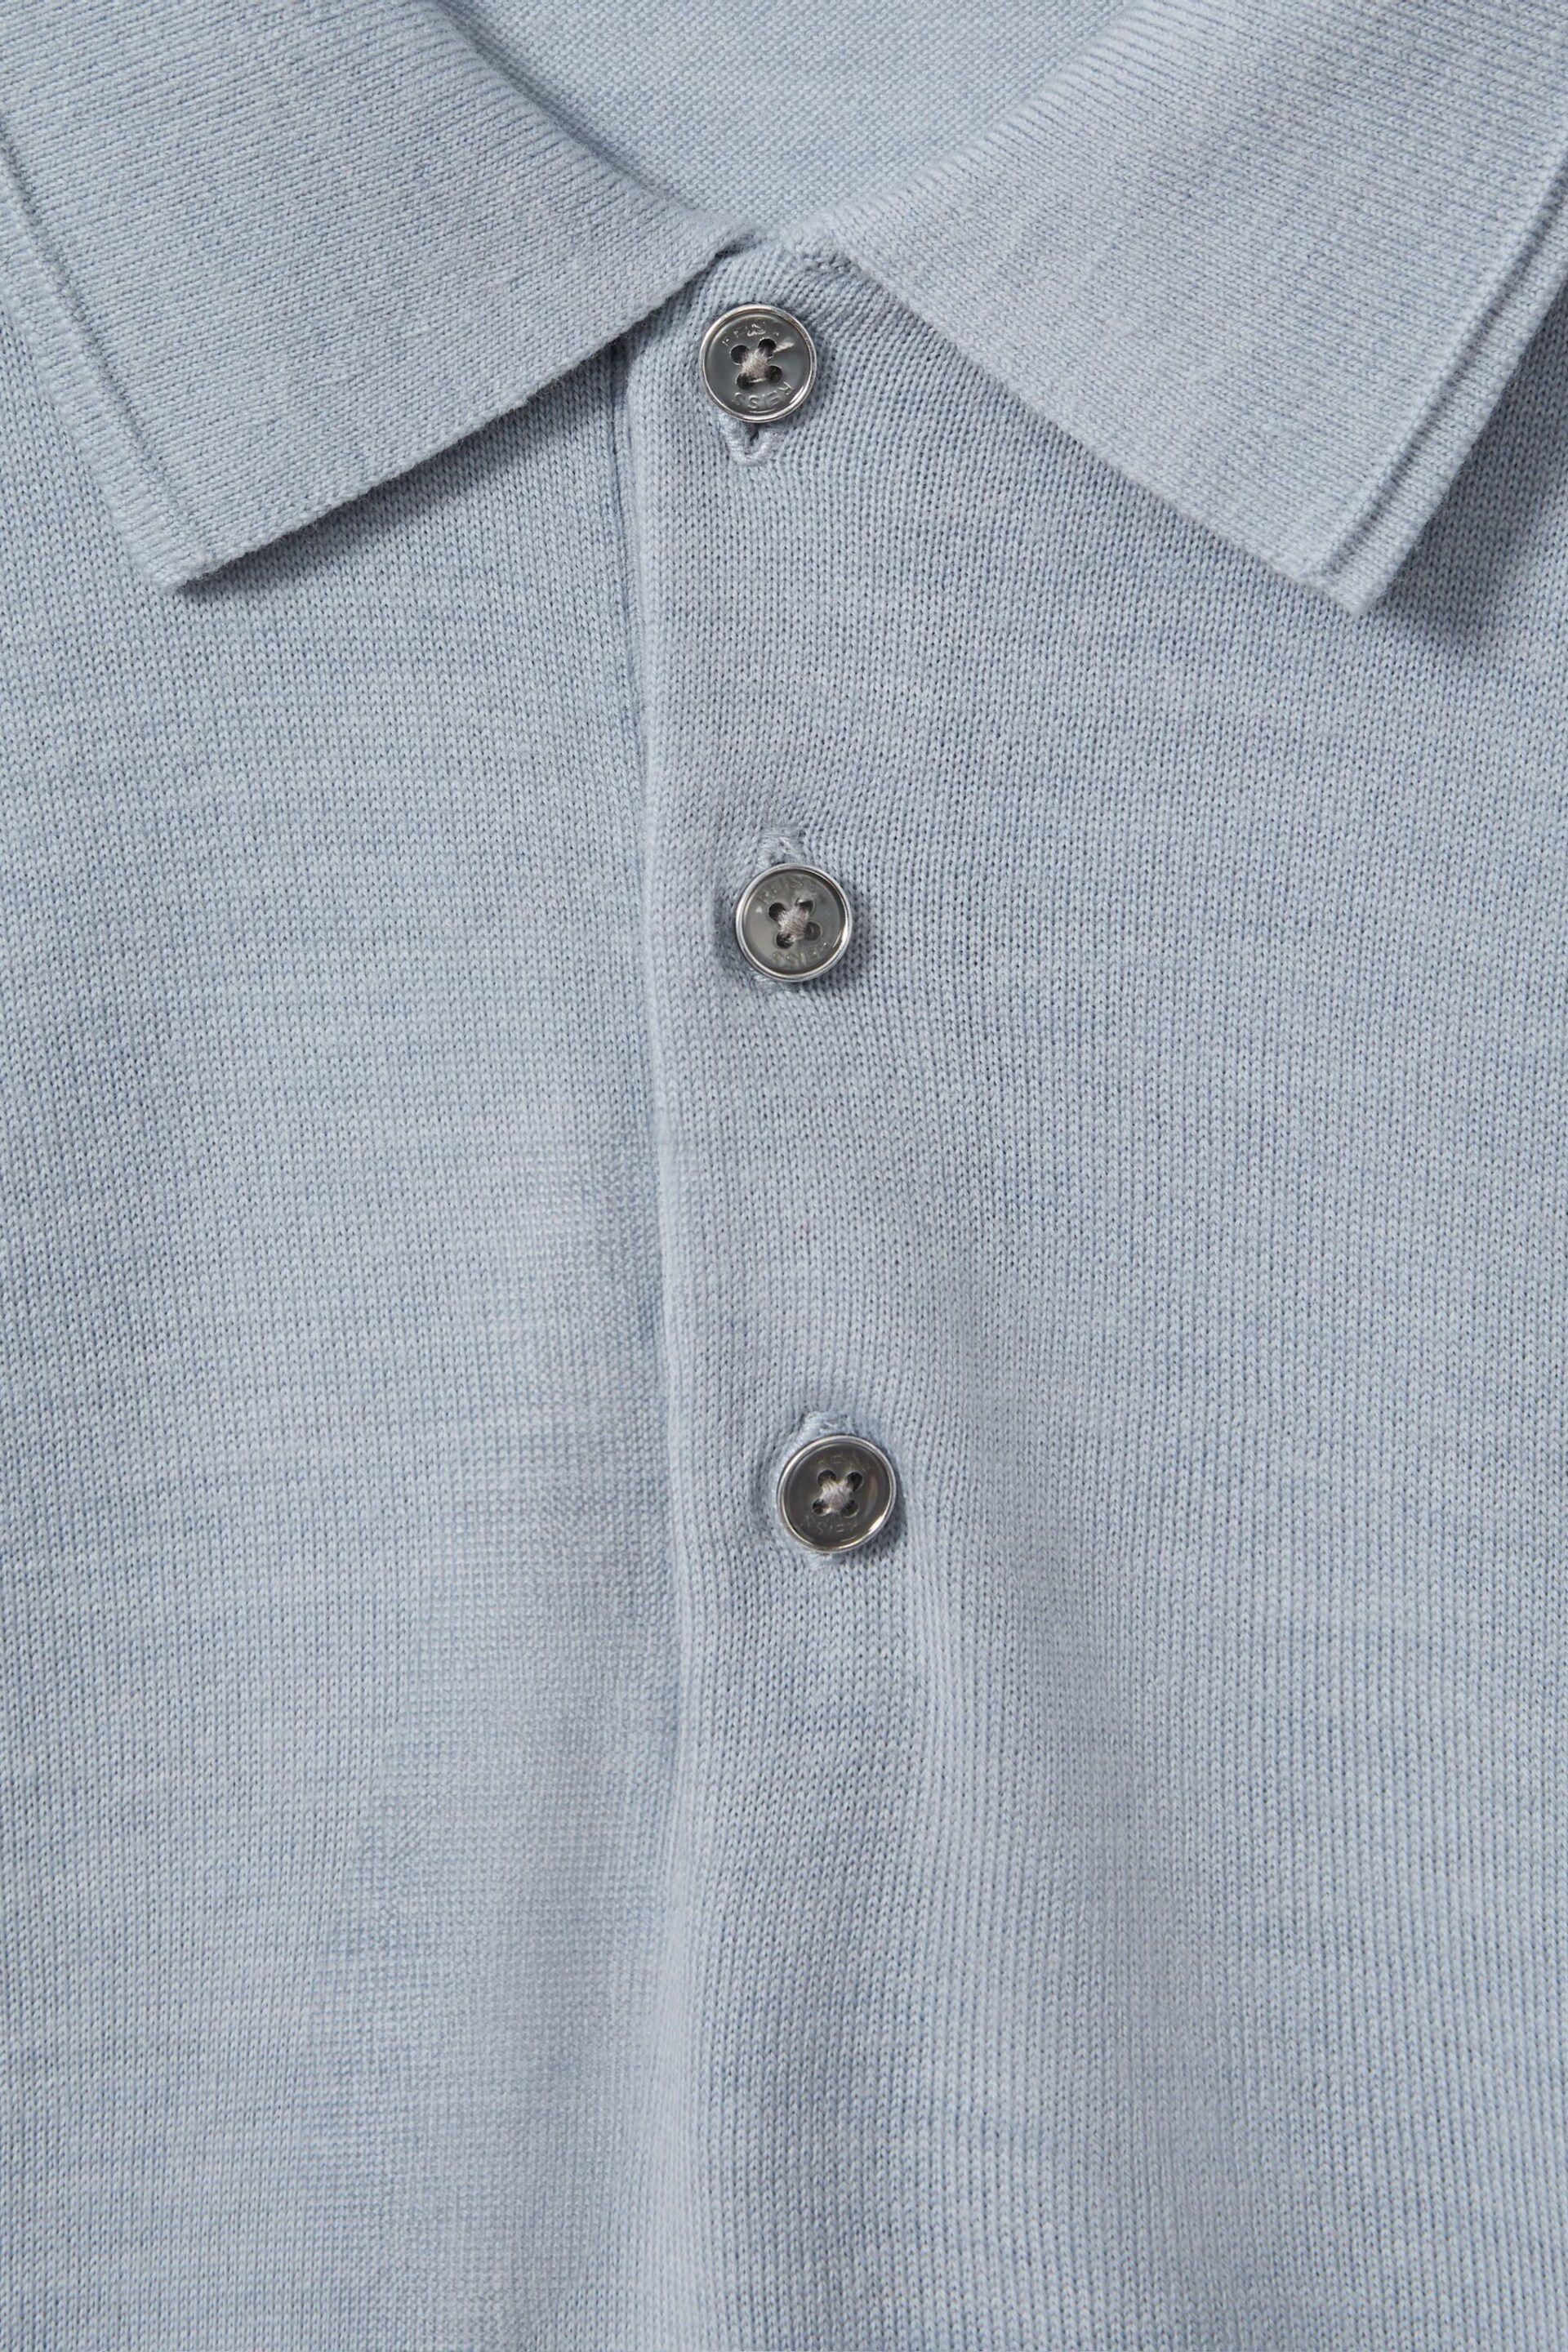 Reiss Soft Blue Melange Manor Merino Wool Polo Shirt - Image 5 of 5